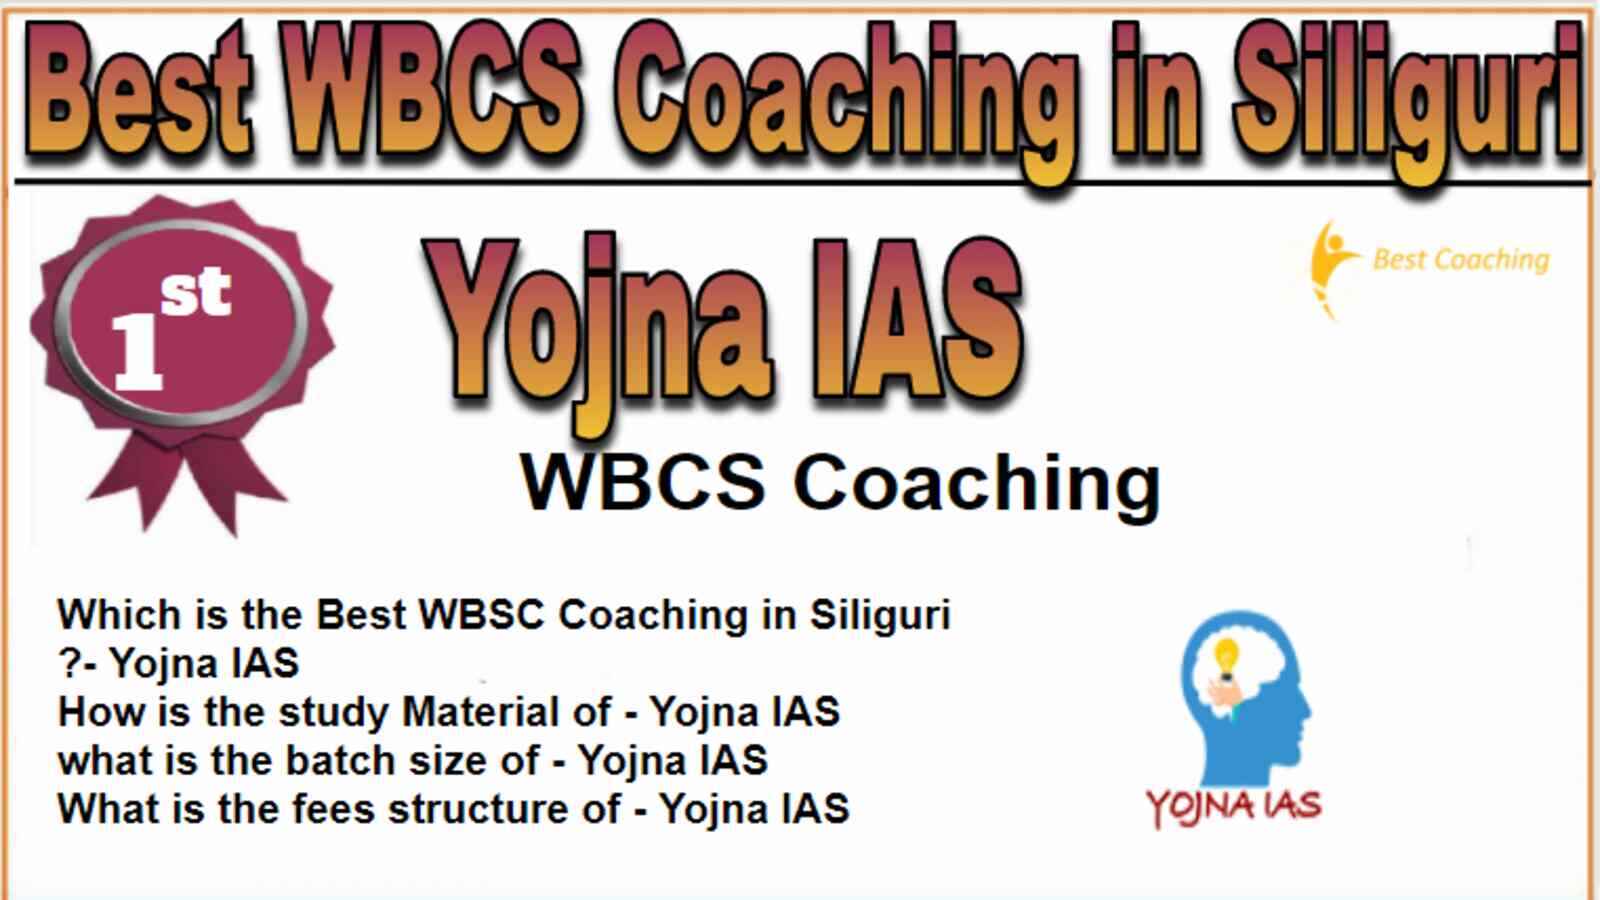 Rank 1 Best WBCS Coaching in Siliguri